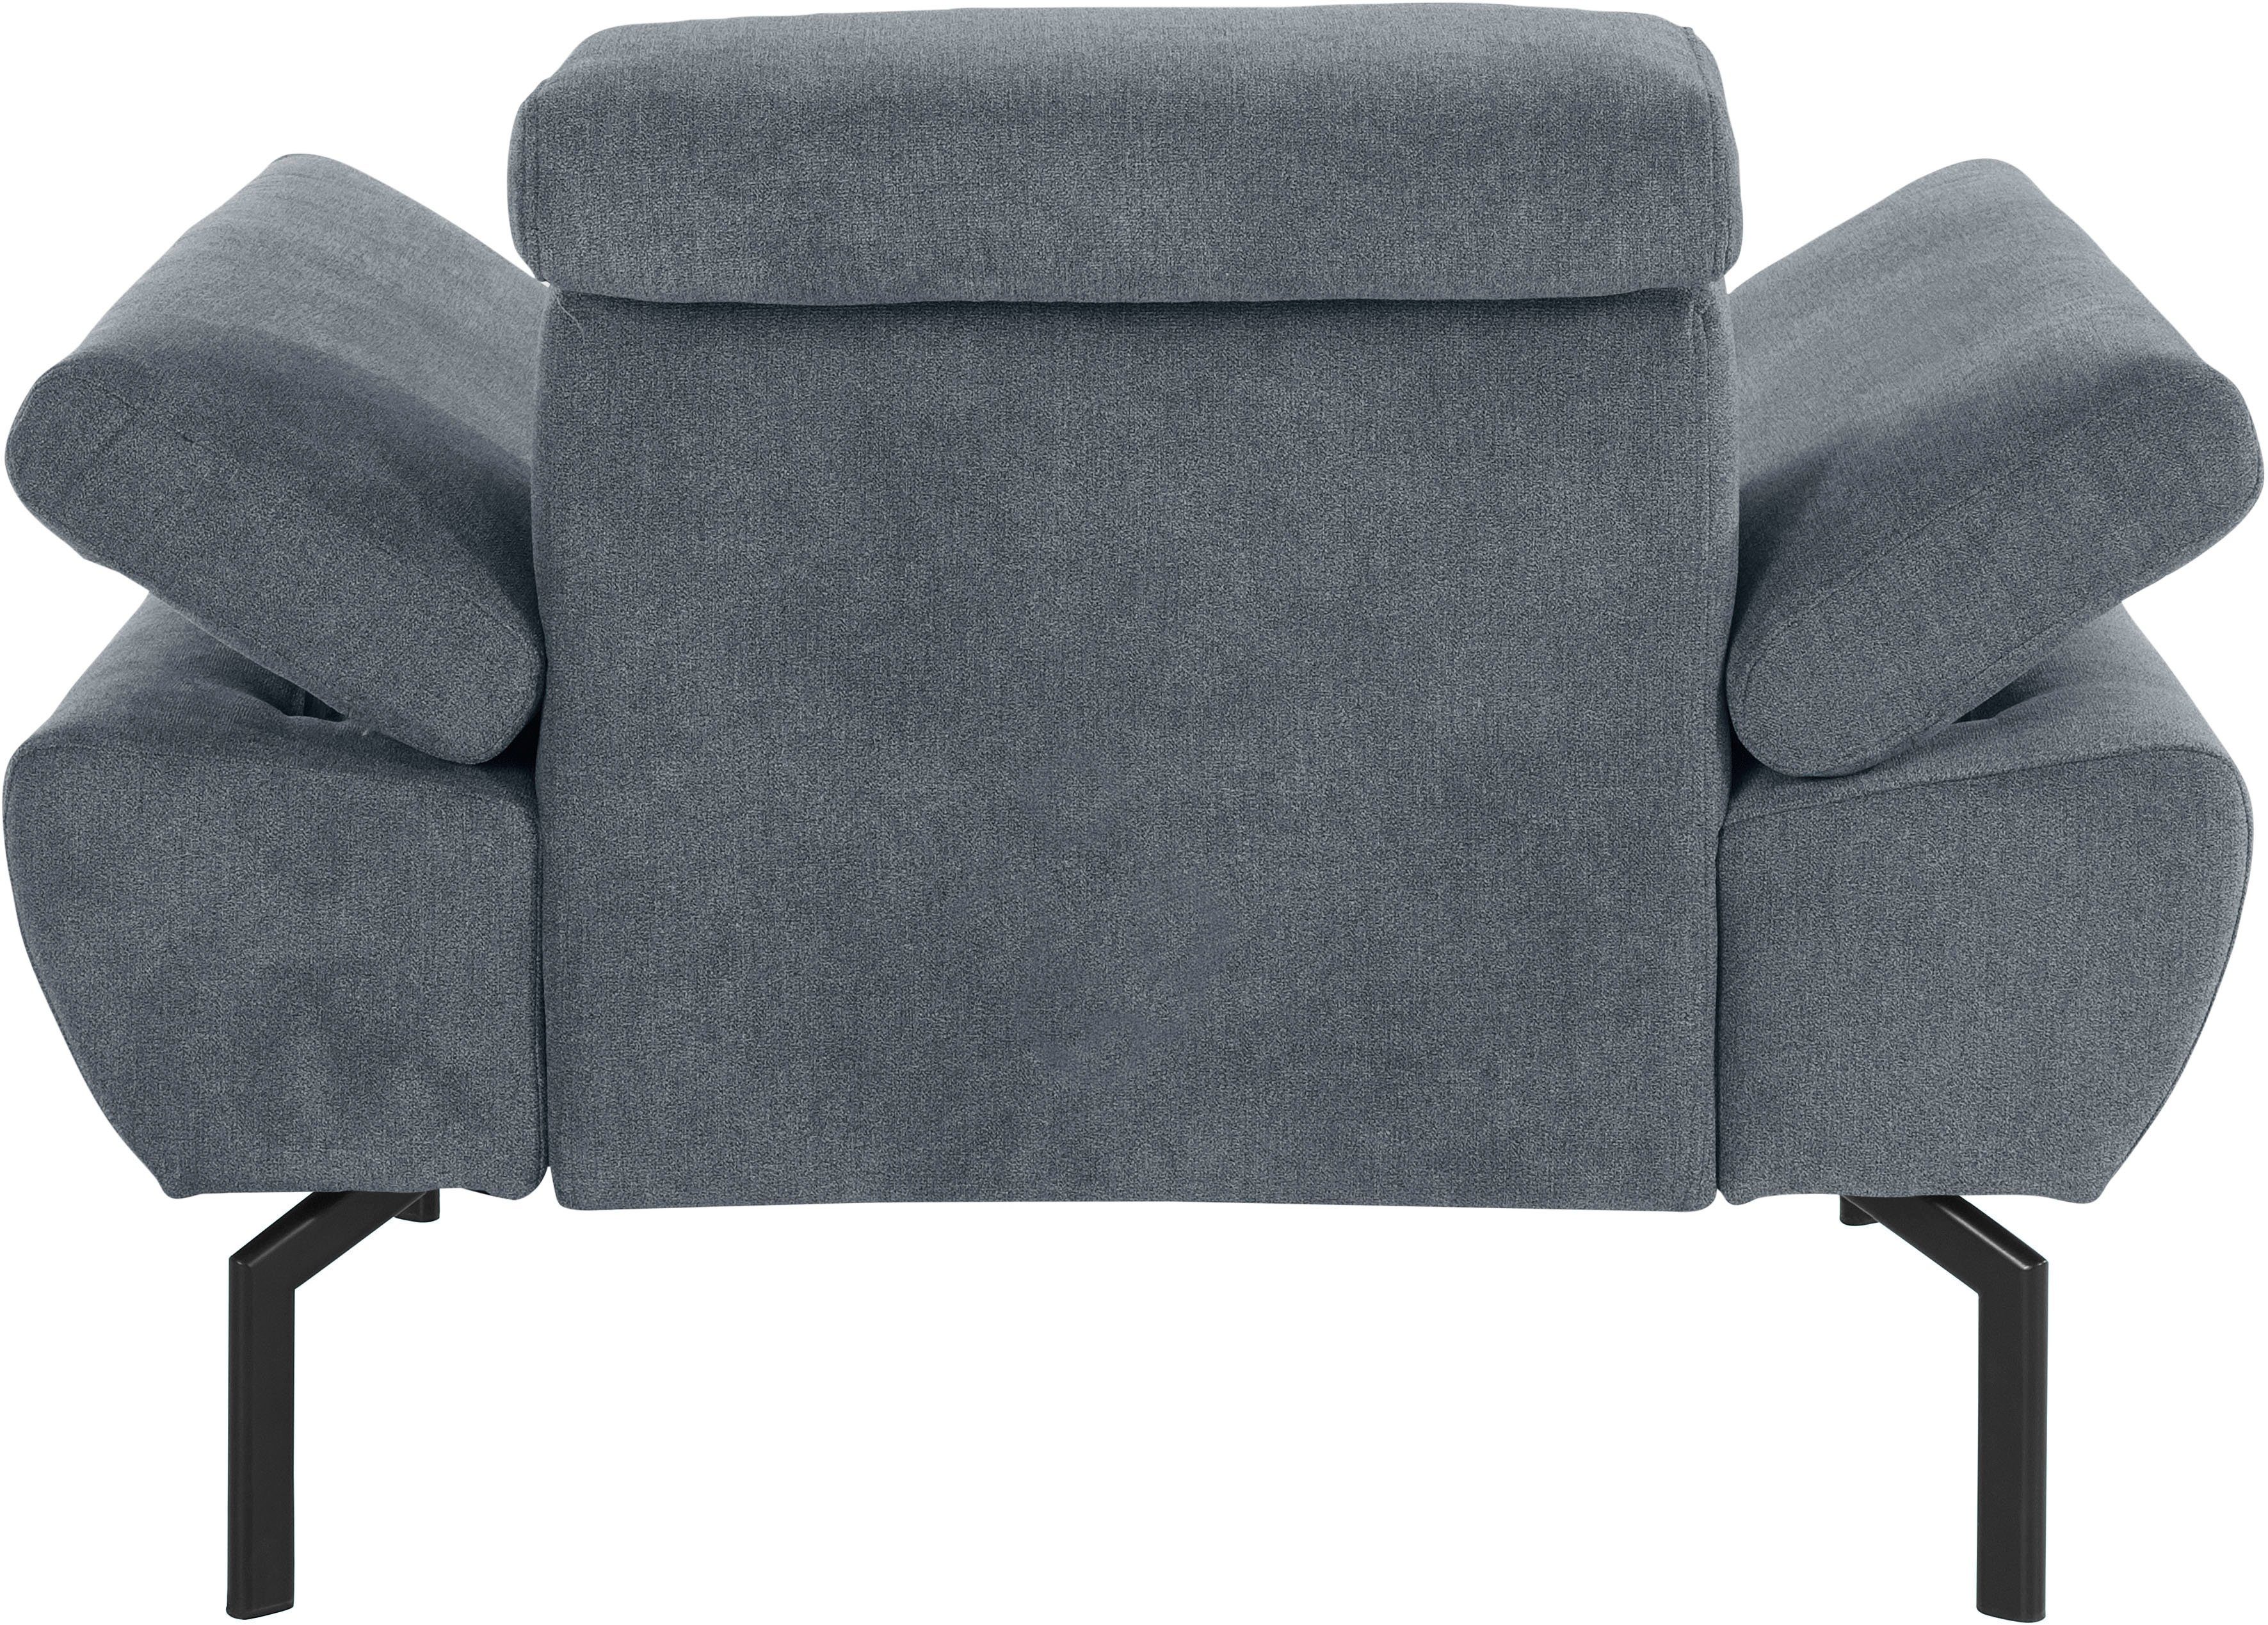 Places of Rückenverstellung, mit Sessel Style Lederoptik Luxus, wahlweise Trapino in Luxus-Microfaser